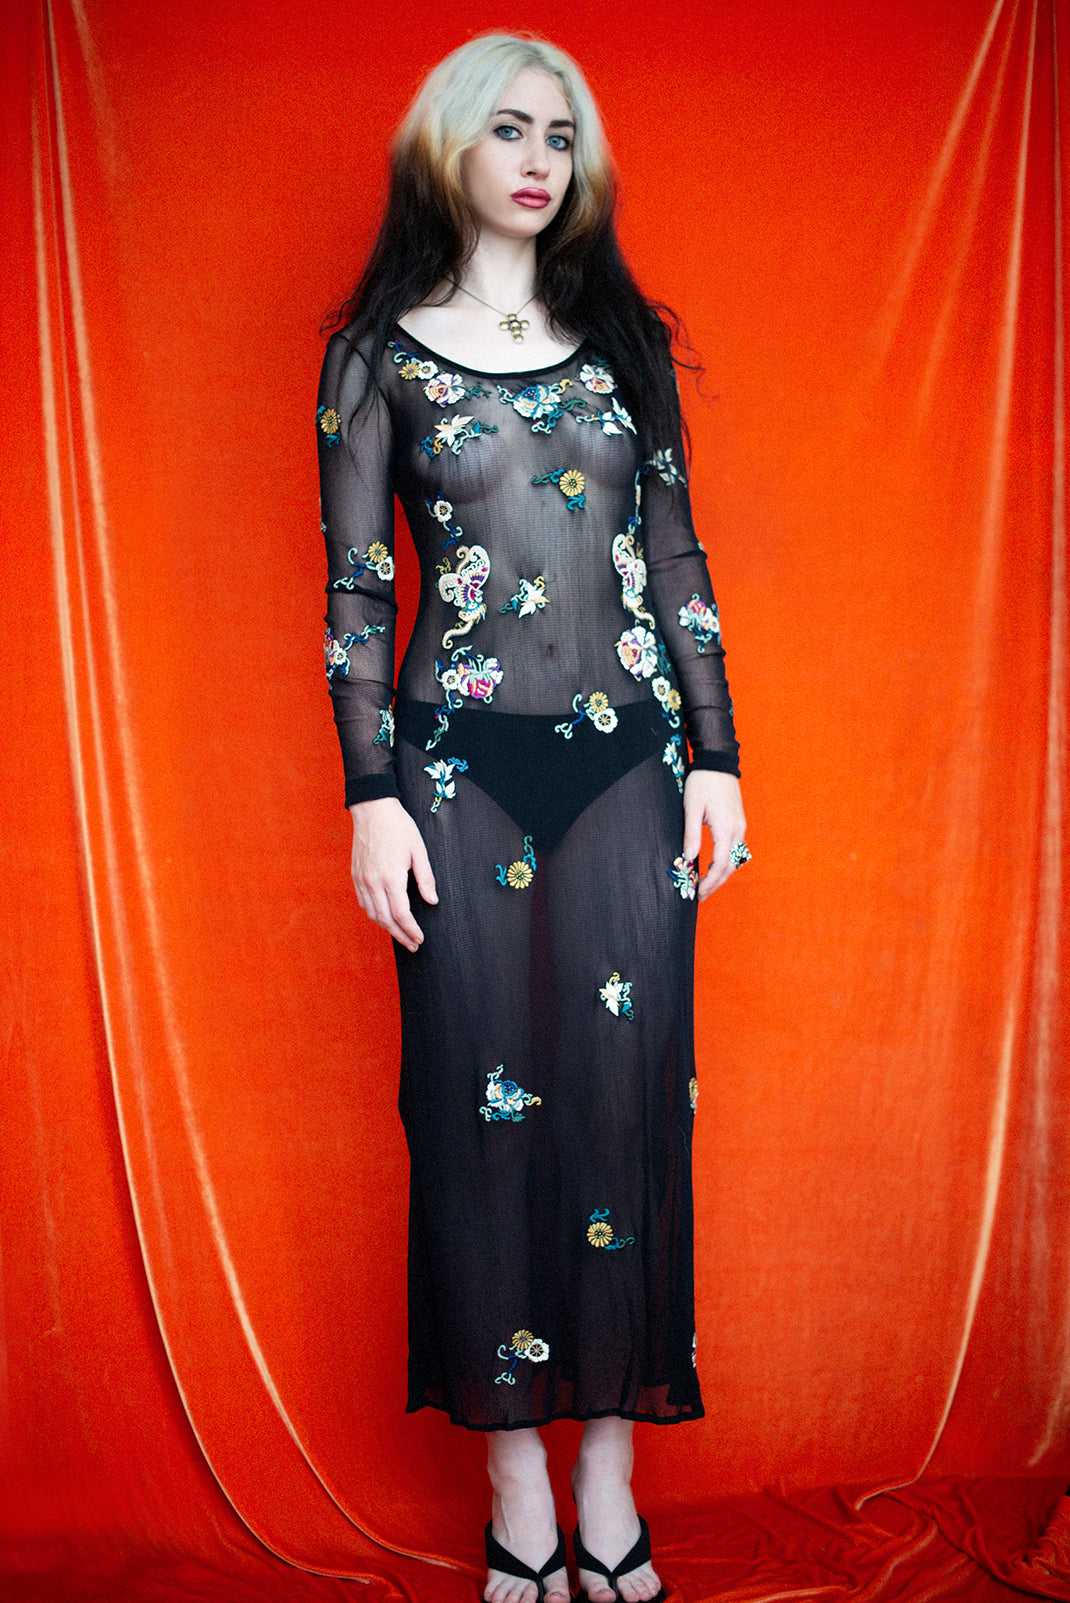 Vivienne Tam vintage mesh dress with flowers